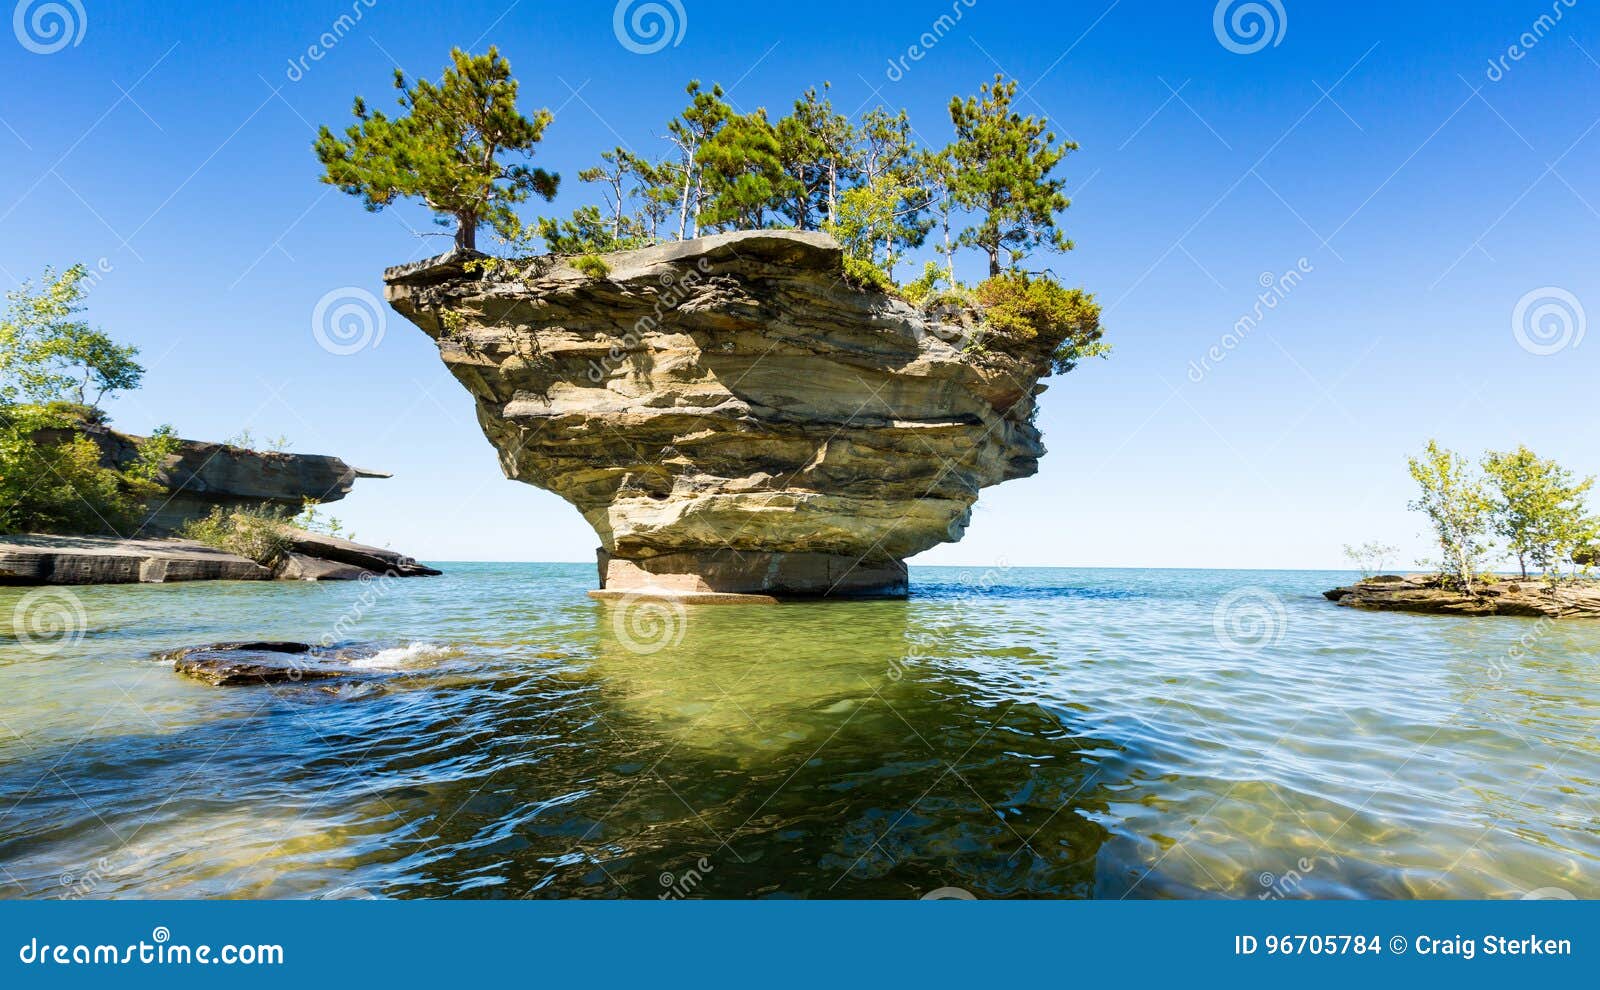 lake huron`s turnip rock, near port austin michigan